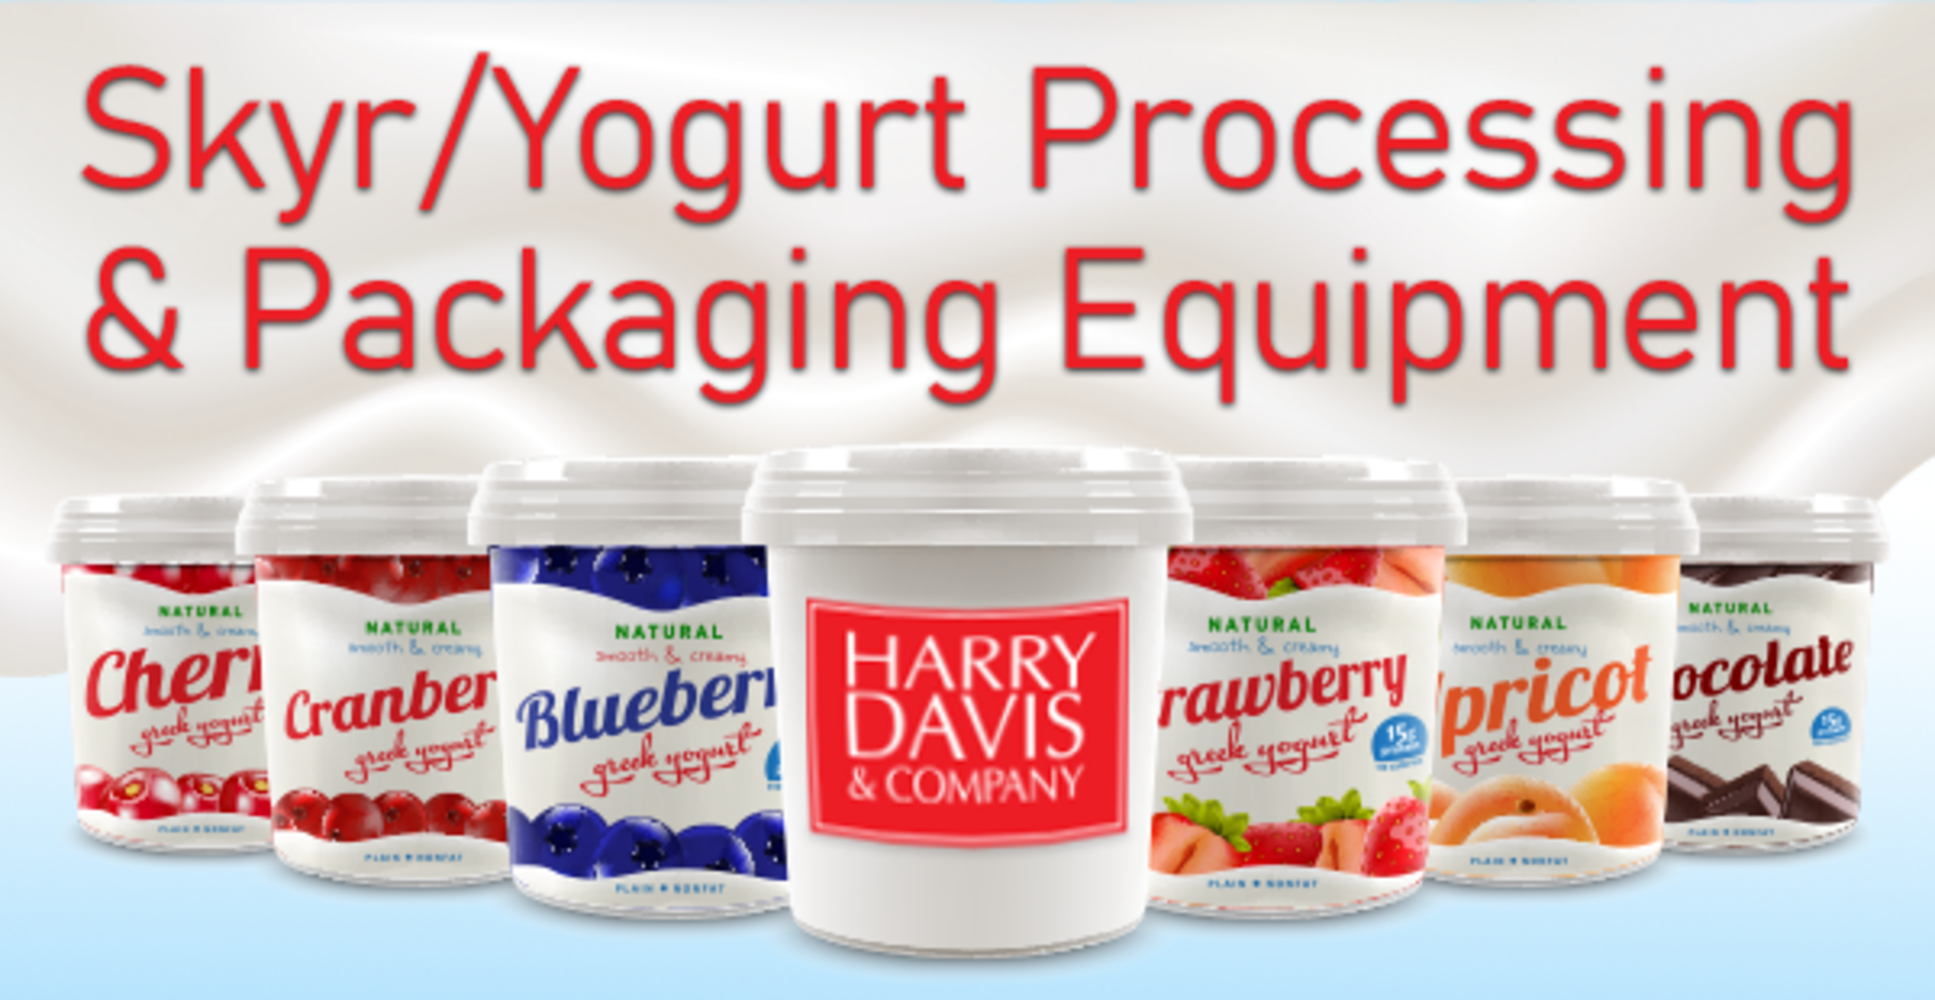 Skyr/Yogurt Processing & Packaging Equipment